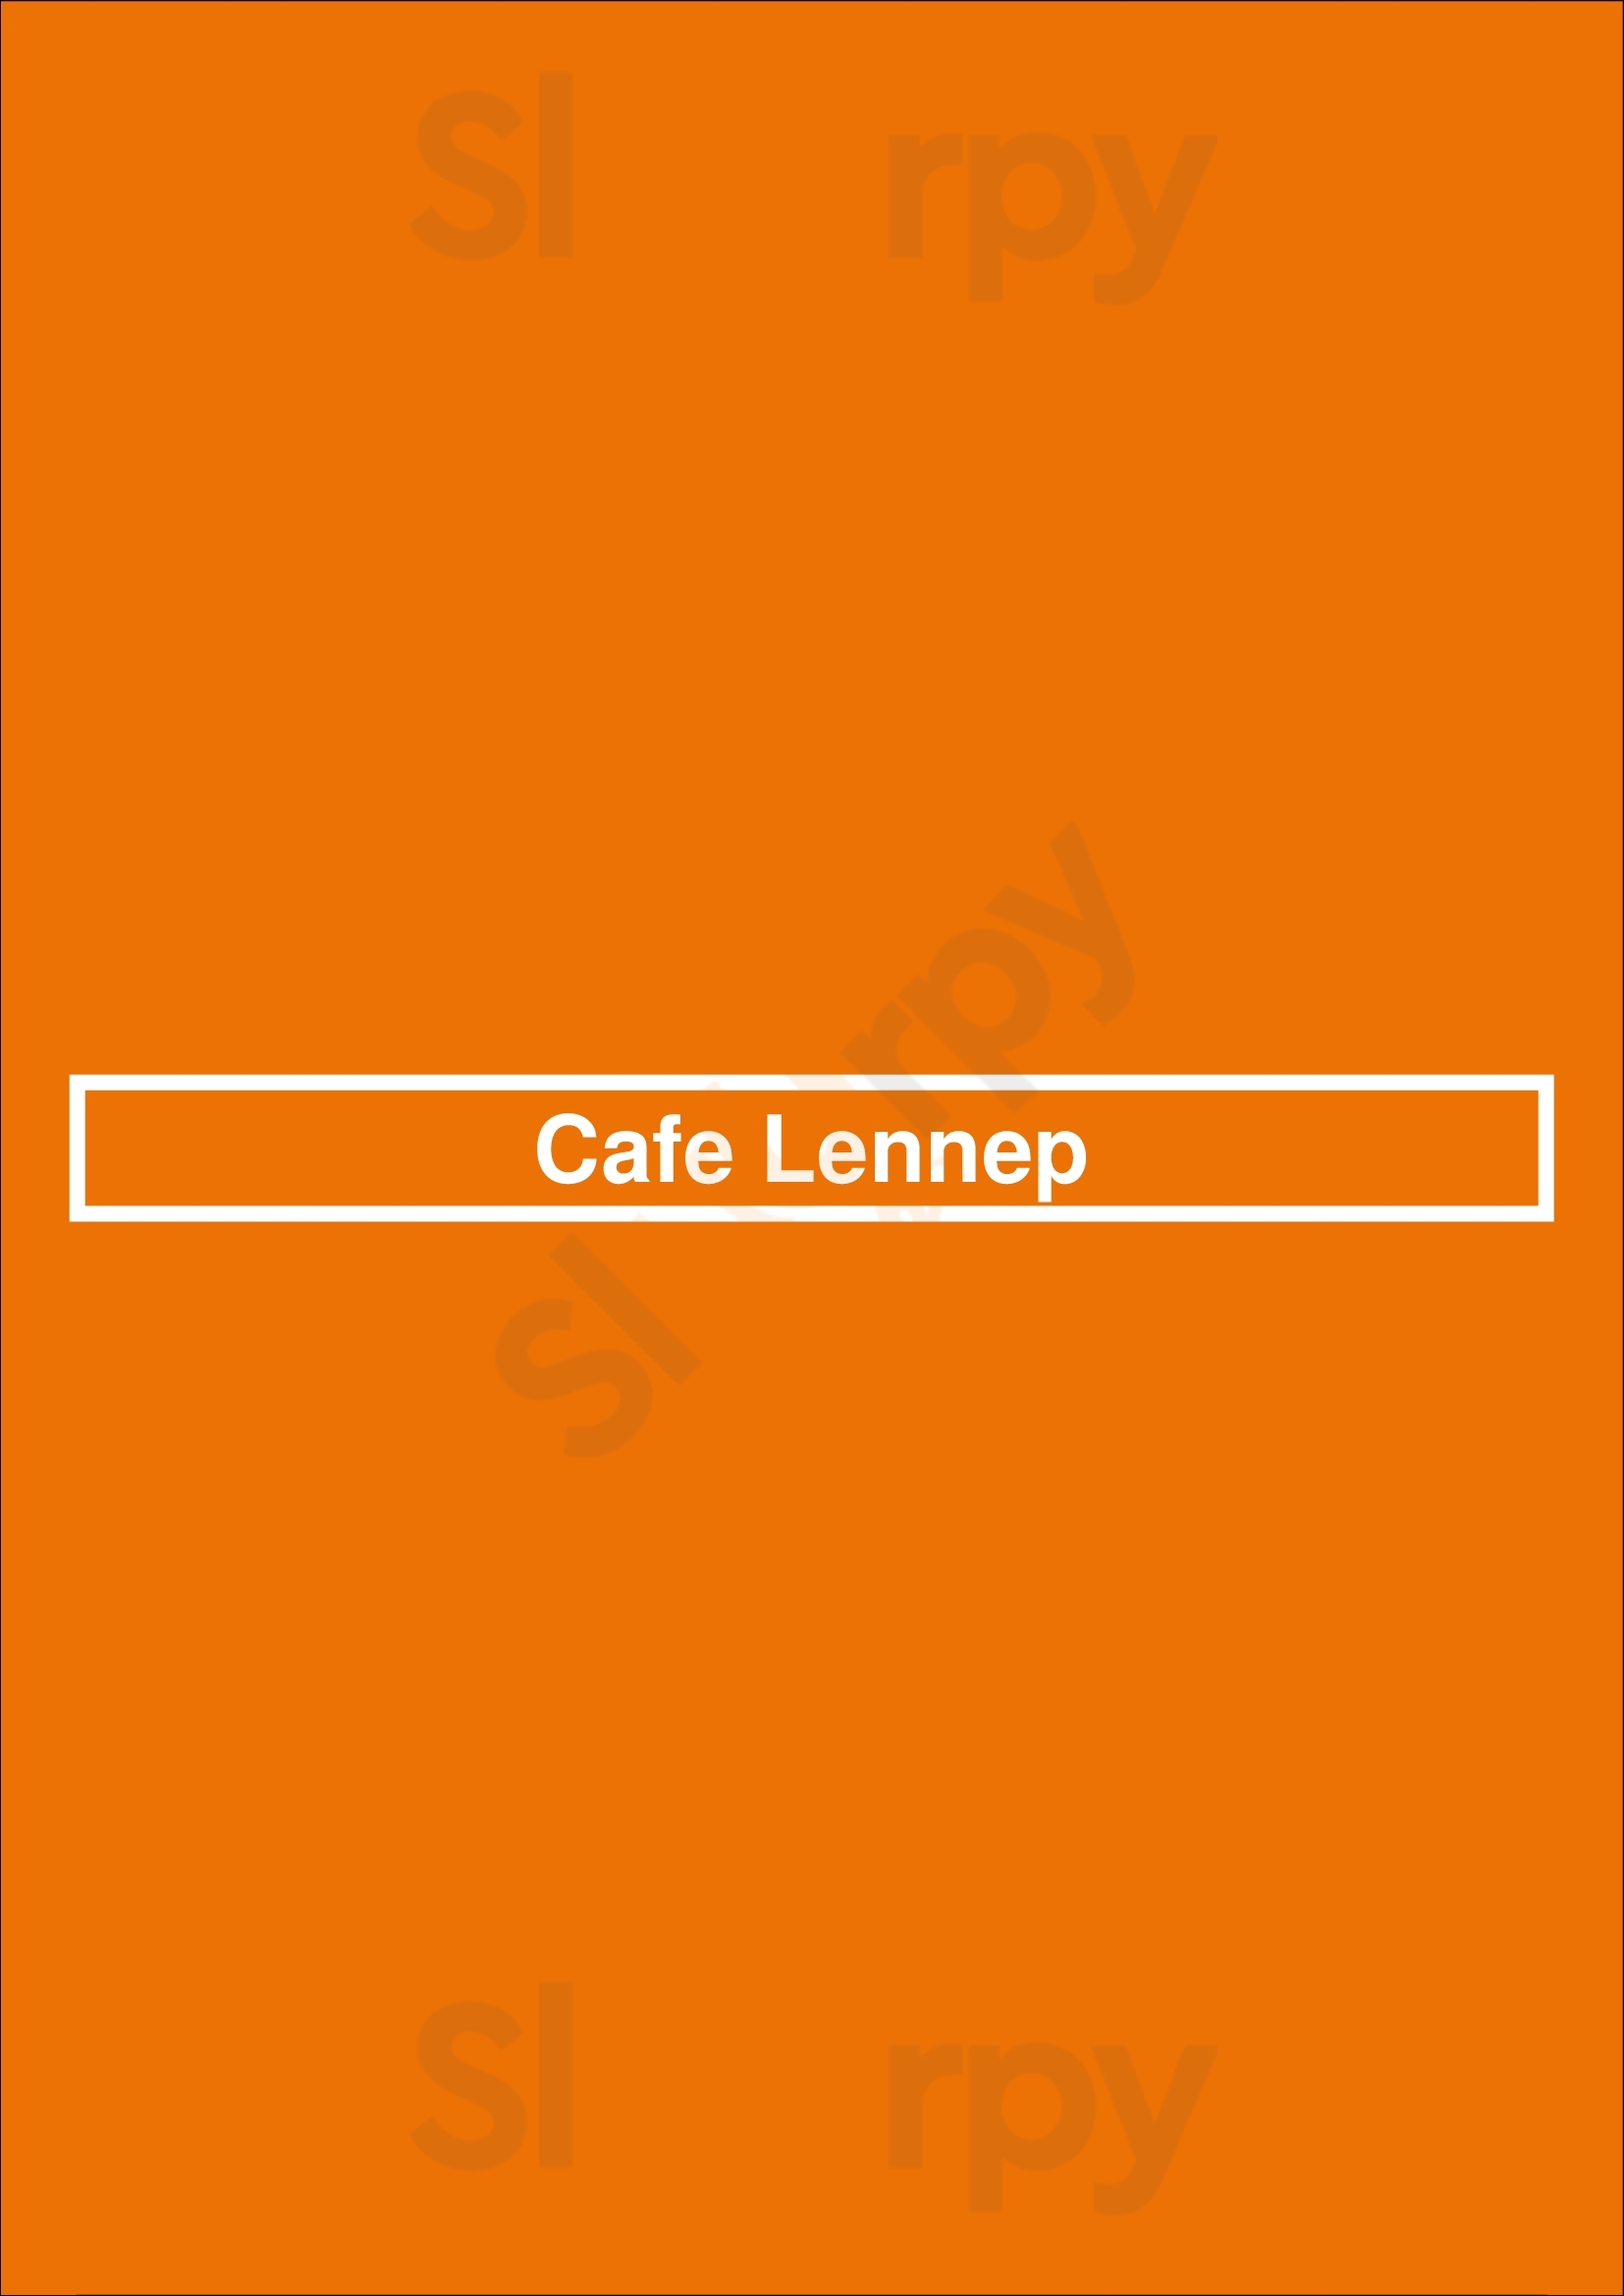 Cafe Lennep Amsterdam Menu - 1